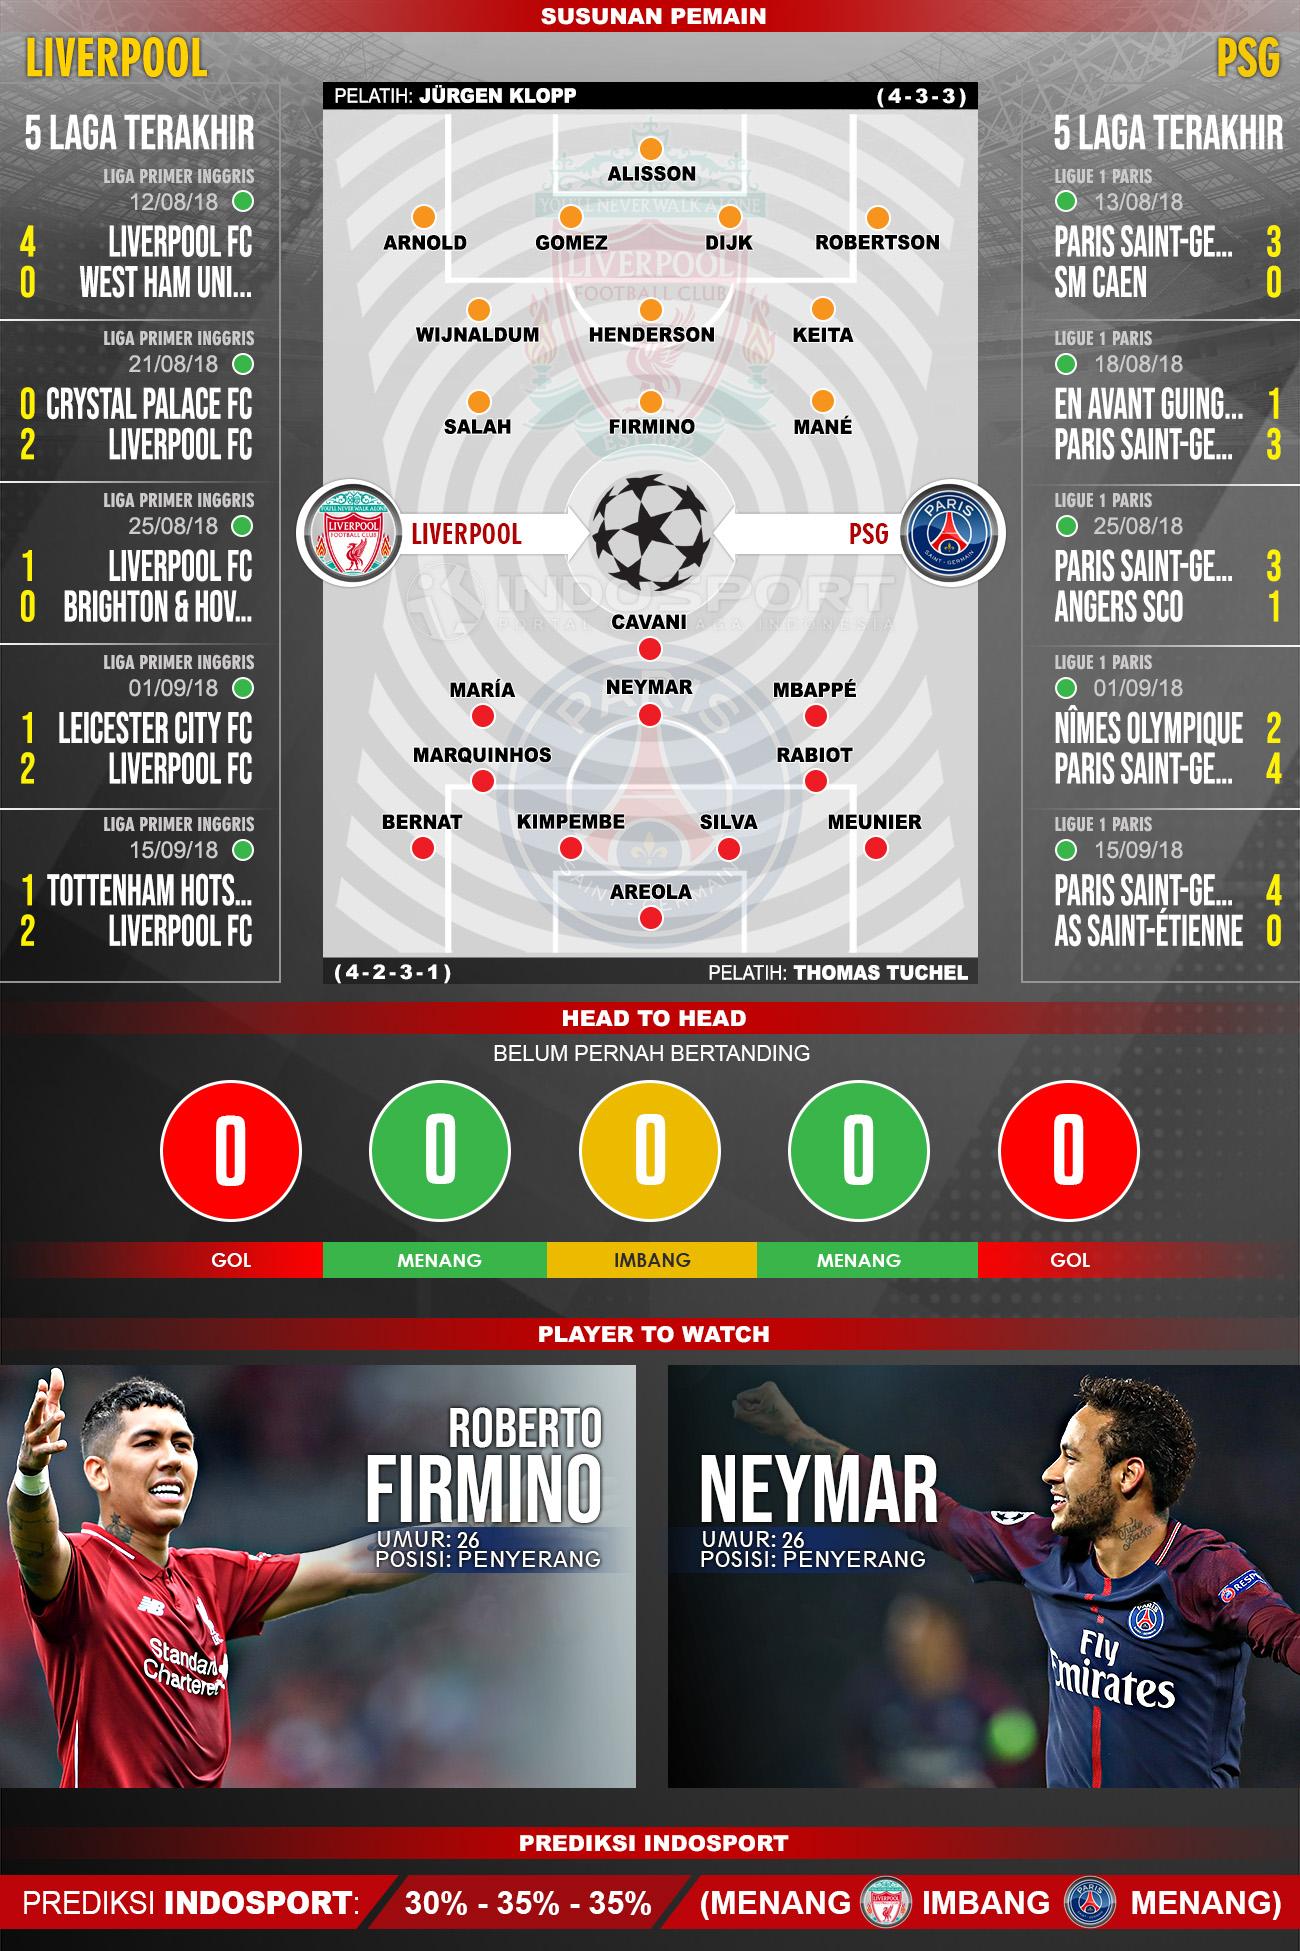 Liverpool vs Paris Saint-Germain (Susunan Pemain - Lima Laga Terakhir - Player to Watch - Prediksi Indosport) Copyright: Indosport.com